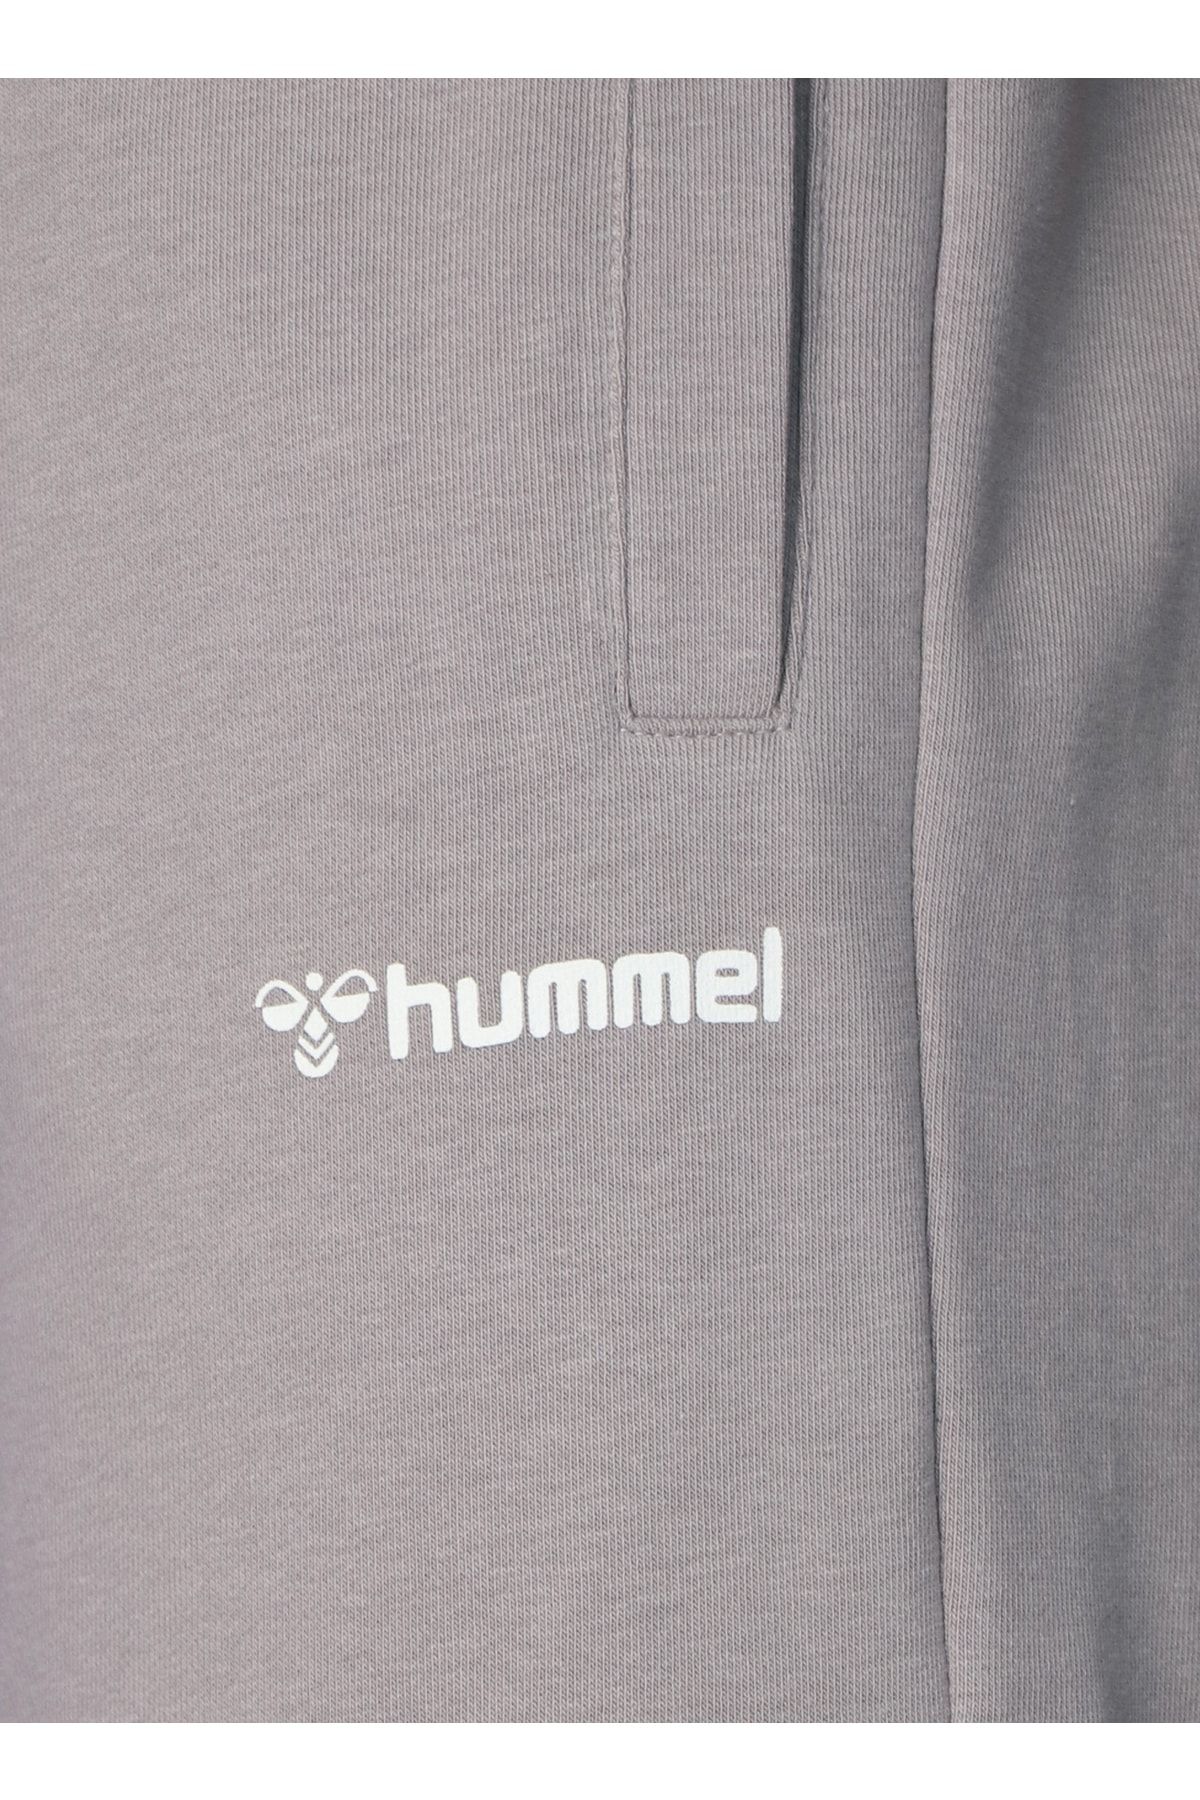 hummel لباس مردانه خاکستری شش شلوار HMLGıno